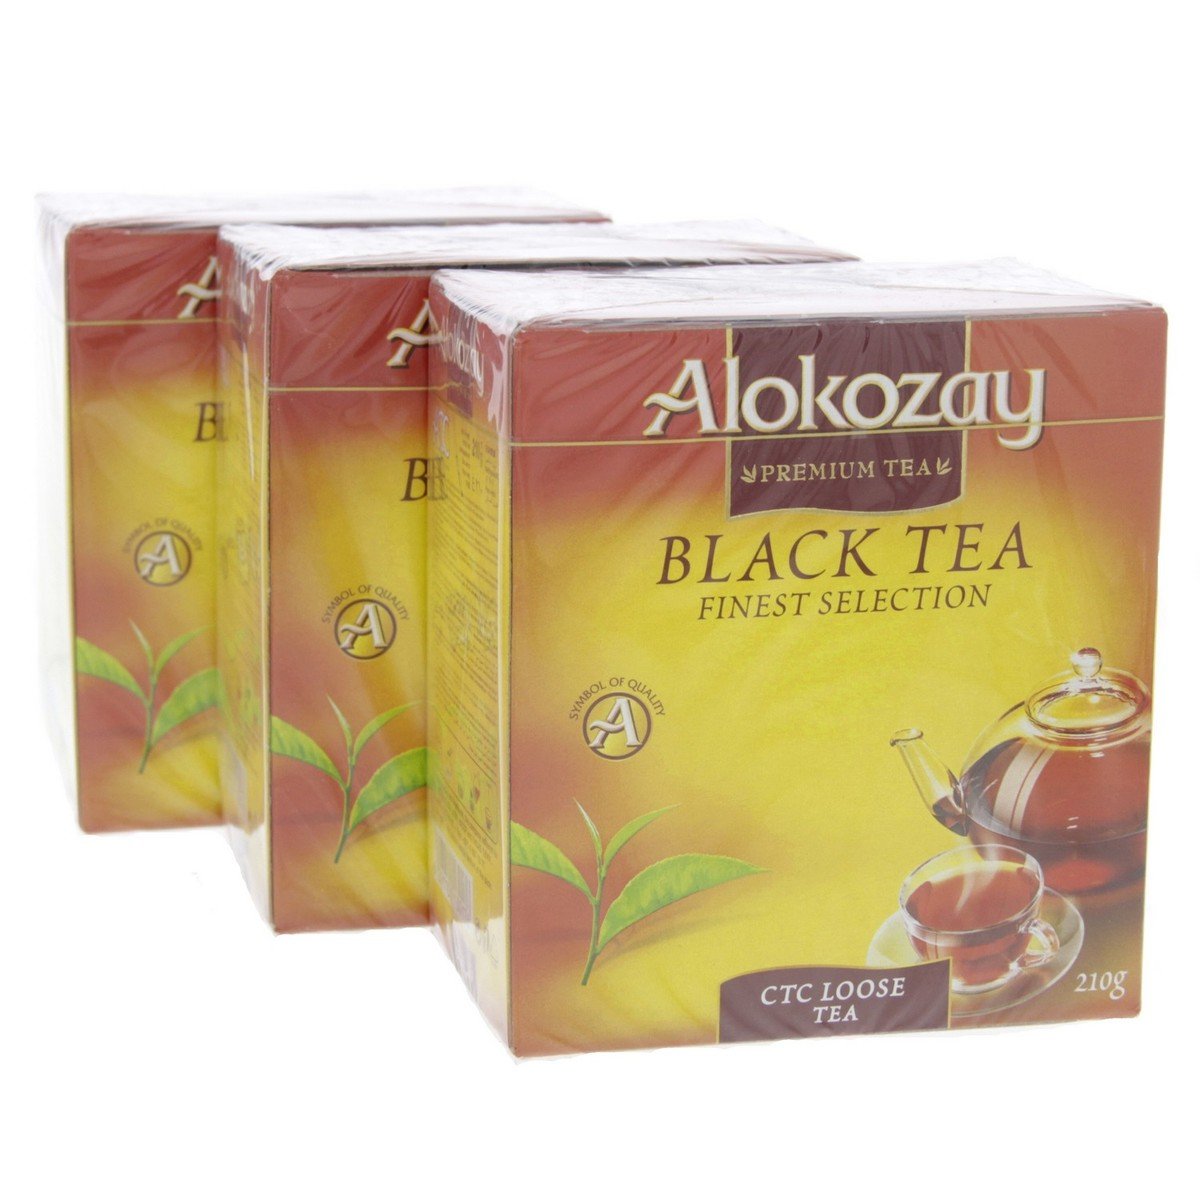 Alokozay Premium Black Tea 3 x 210 g